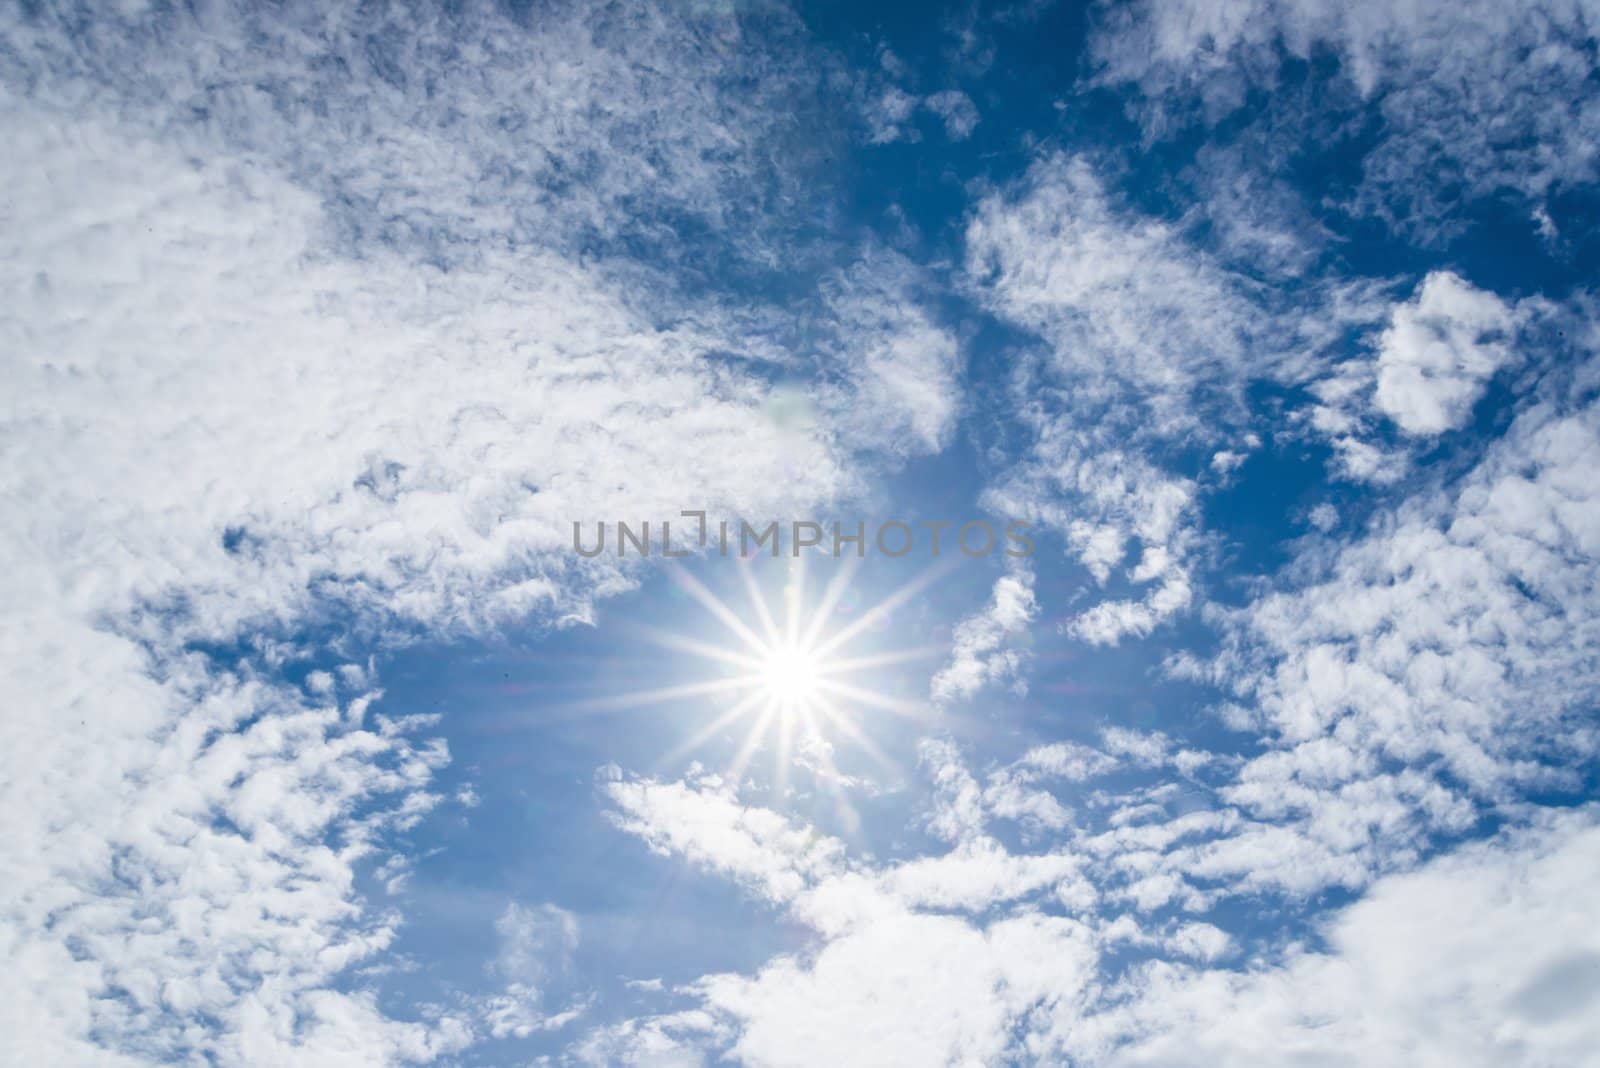 Nice white cloud and sun with fair on the sky by wmitrmatr